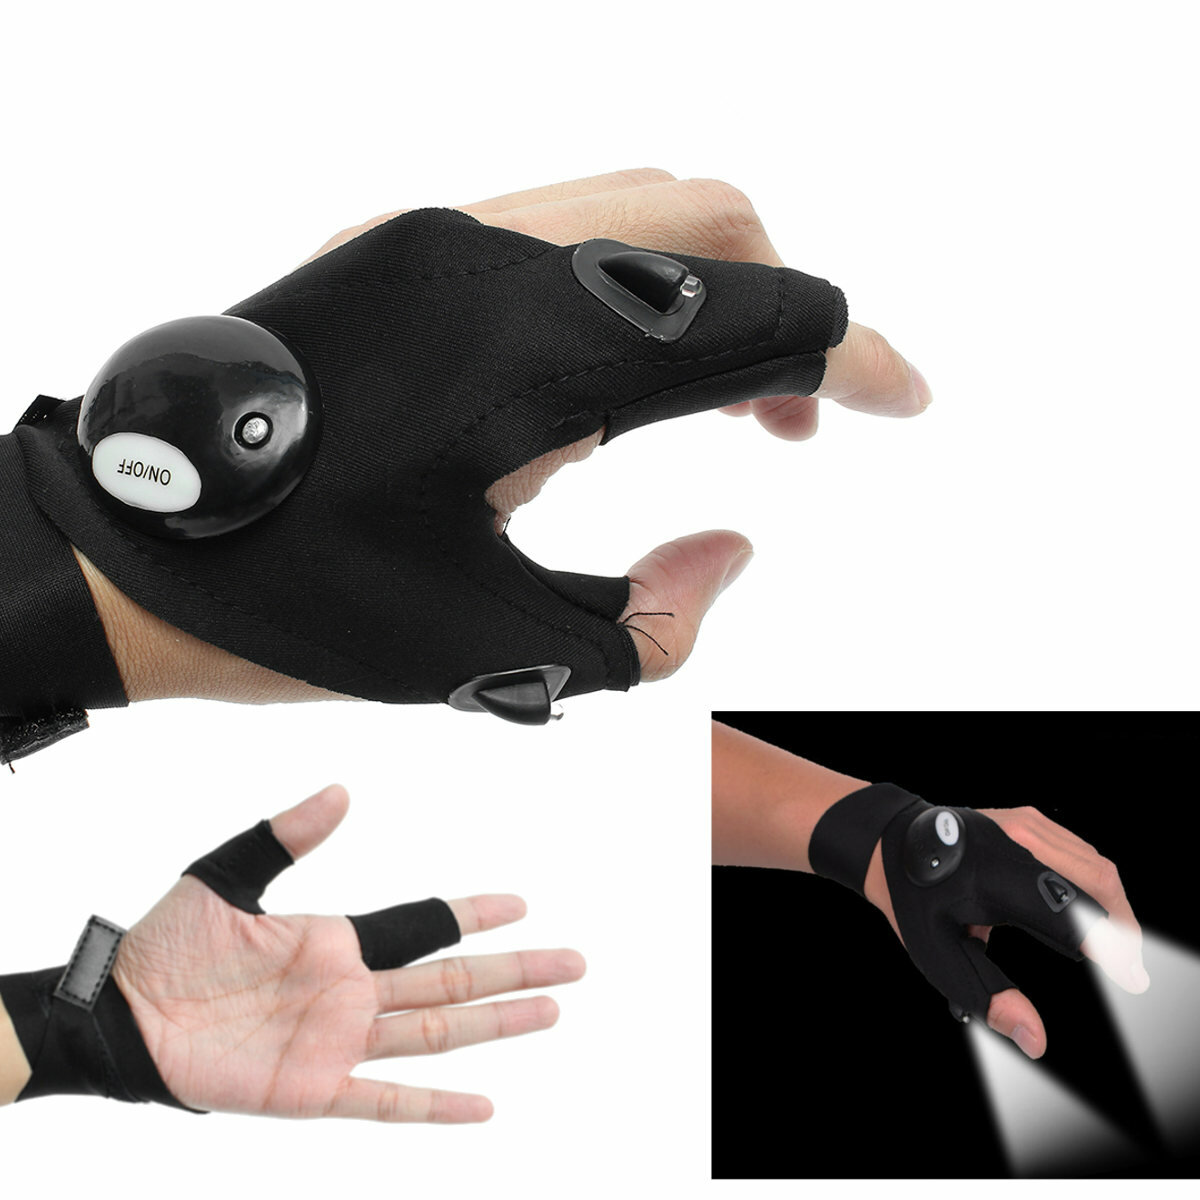 Tragbare Finger-Beleuchtungshandschuhe Fingerhandschuhe mit LED Licht zum Reparieren im Freien, Wandern, Camping